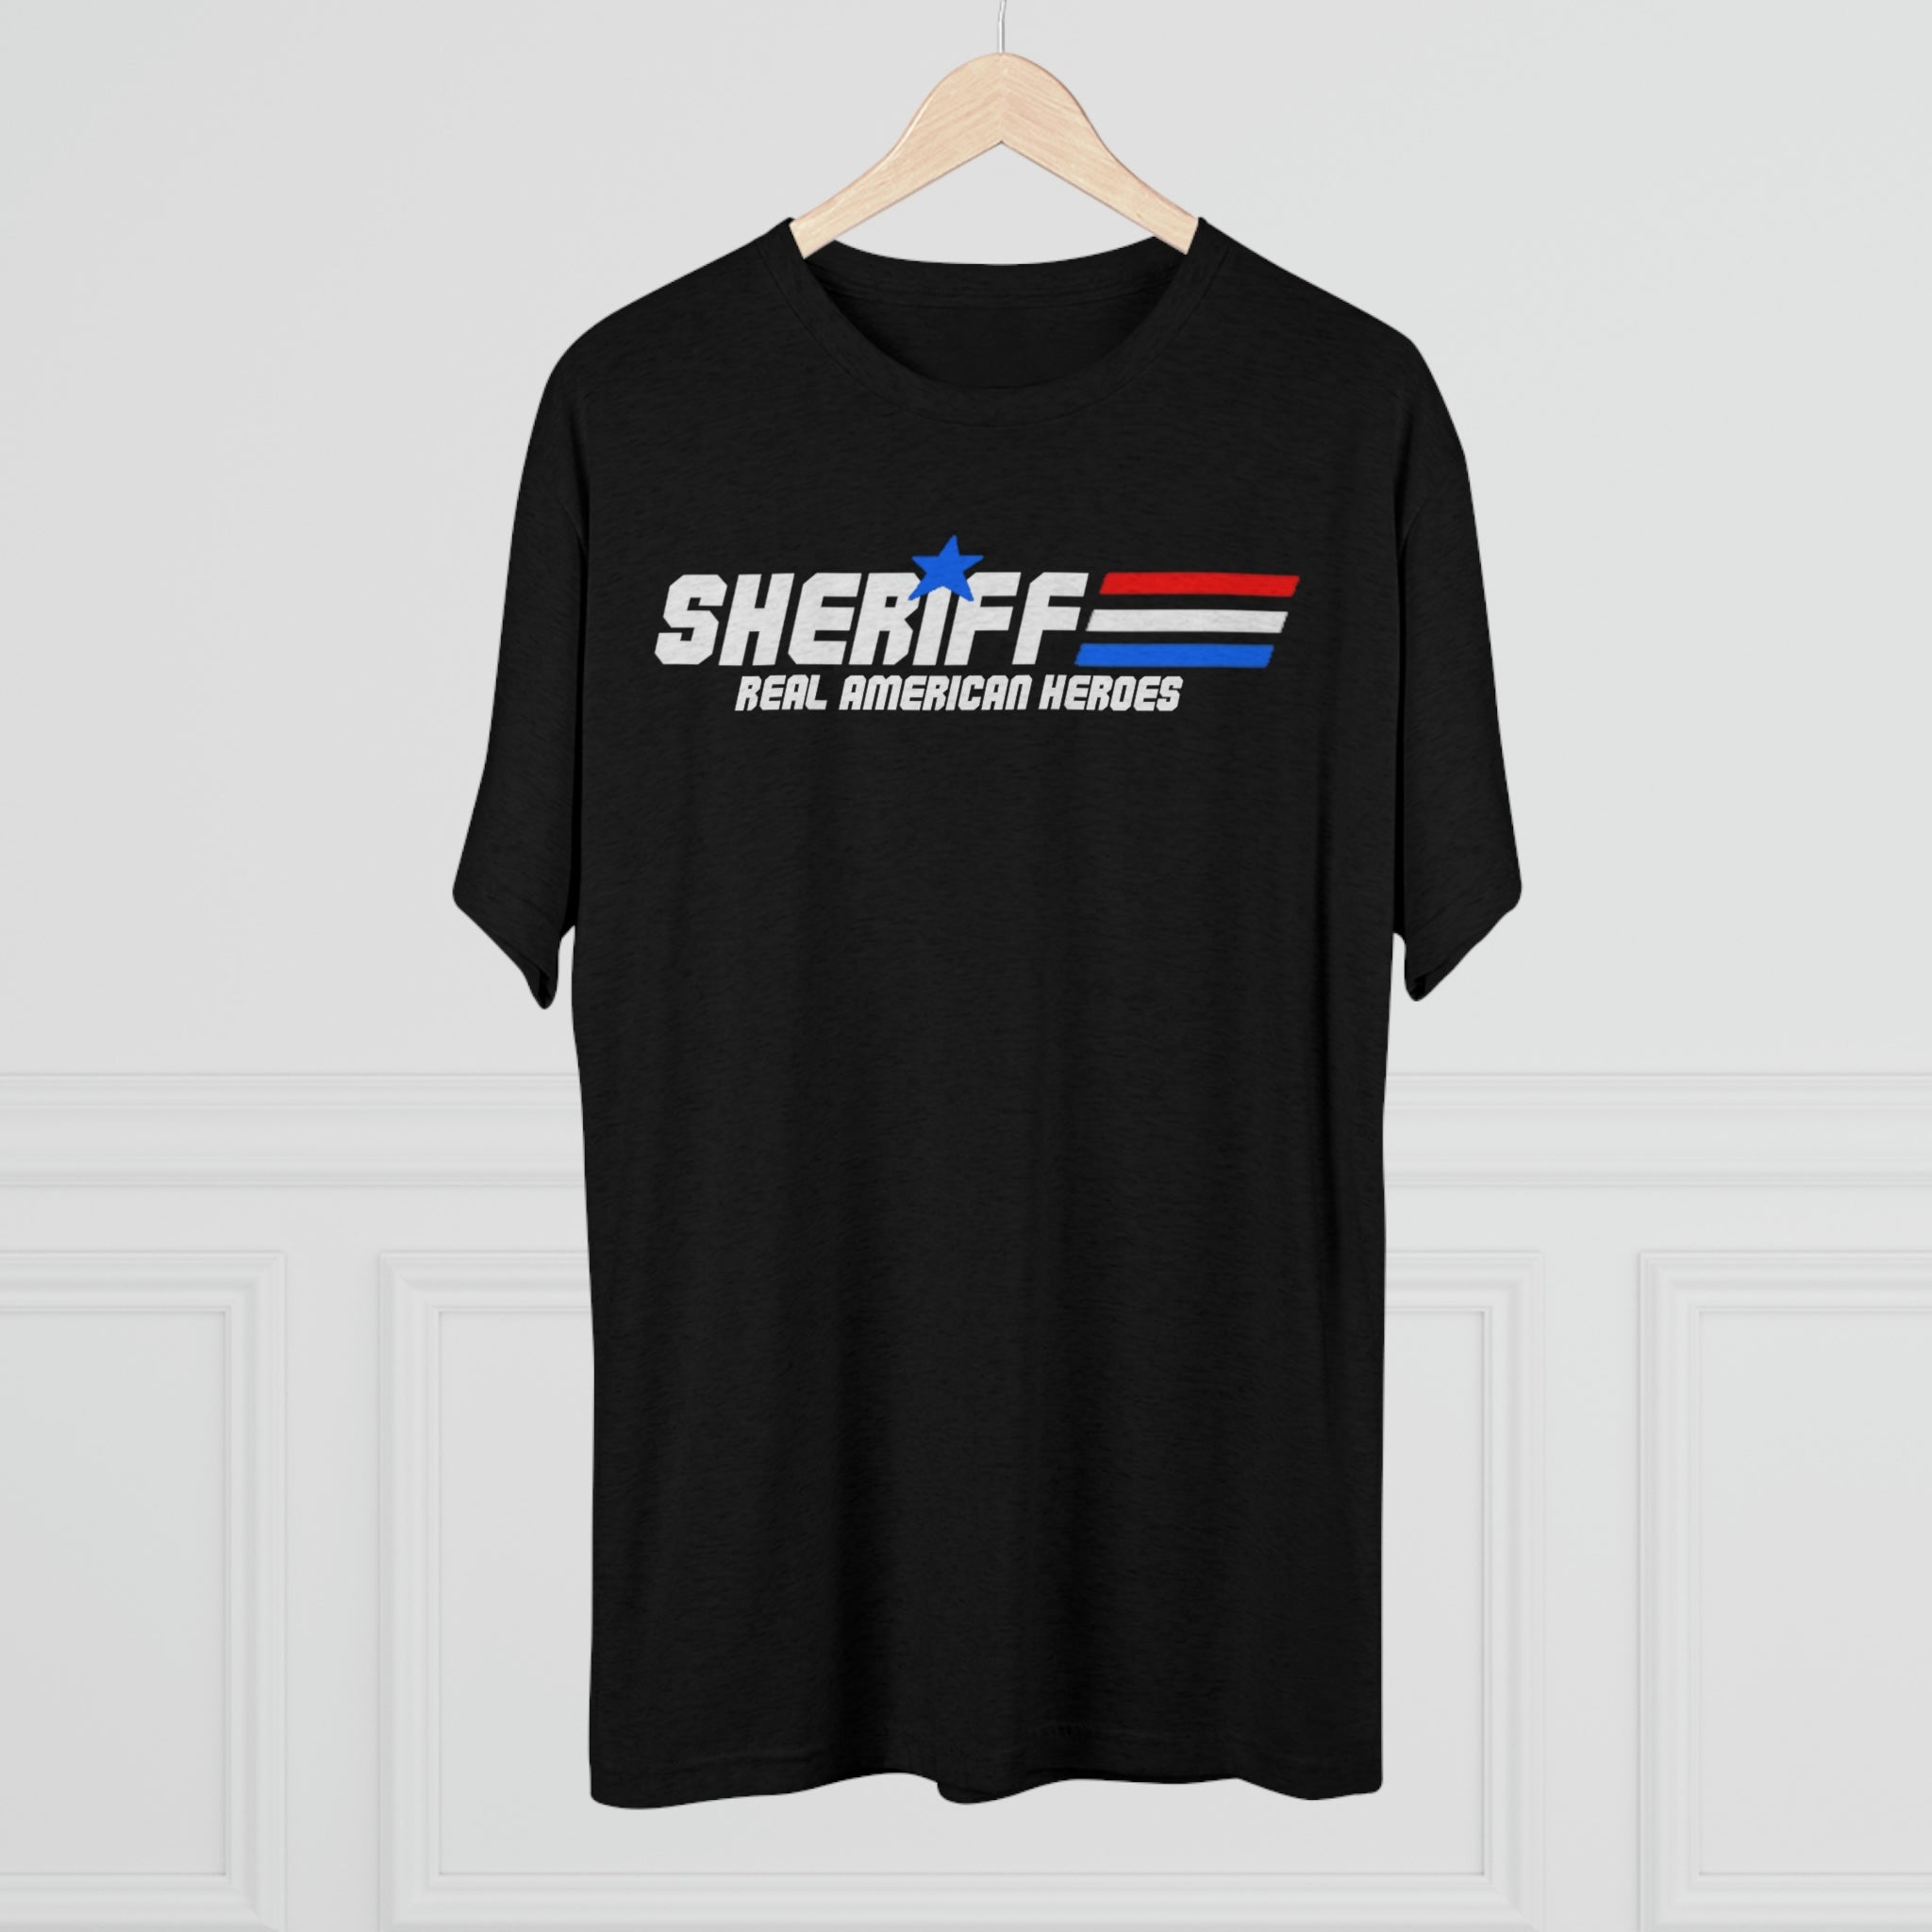 Unisex Tri-Blend Crew Tee - Sheriff "Real American Heroes"